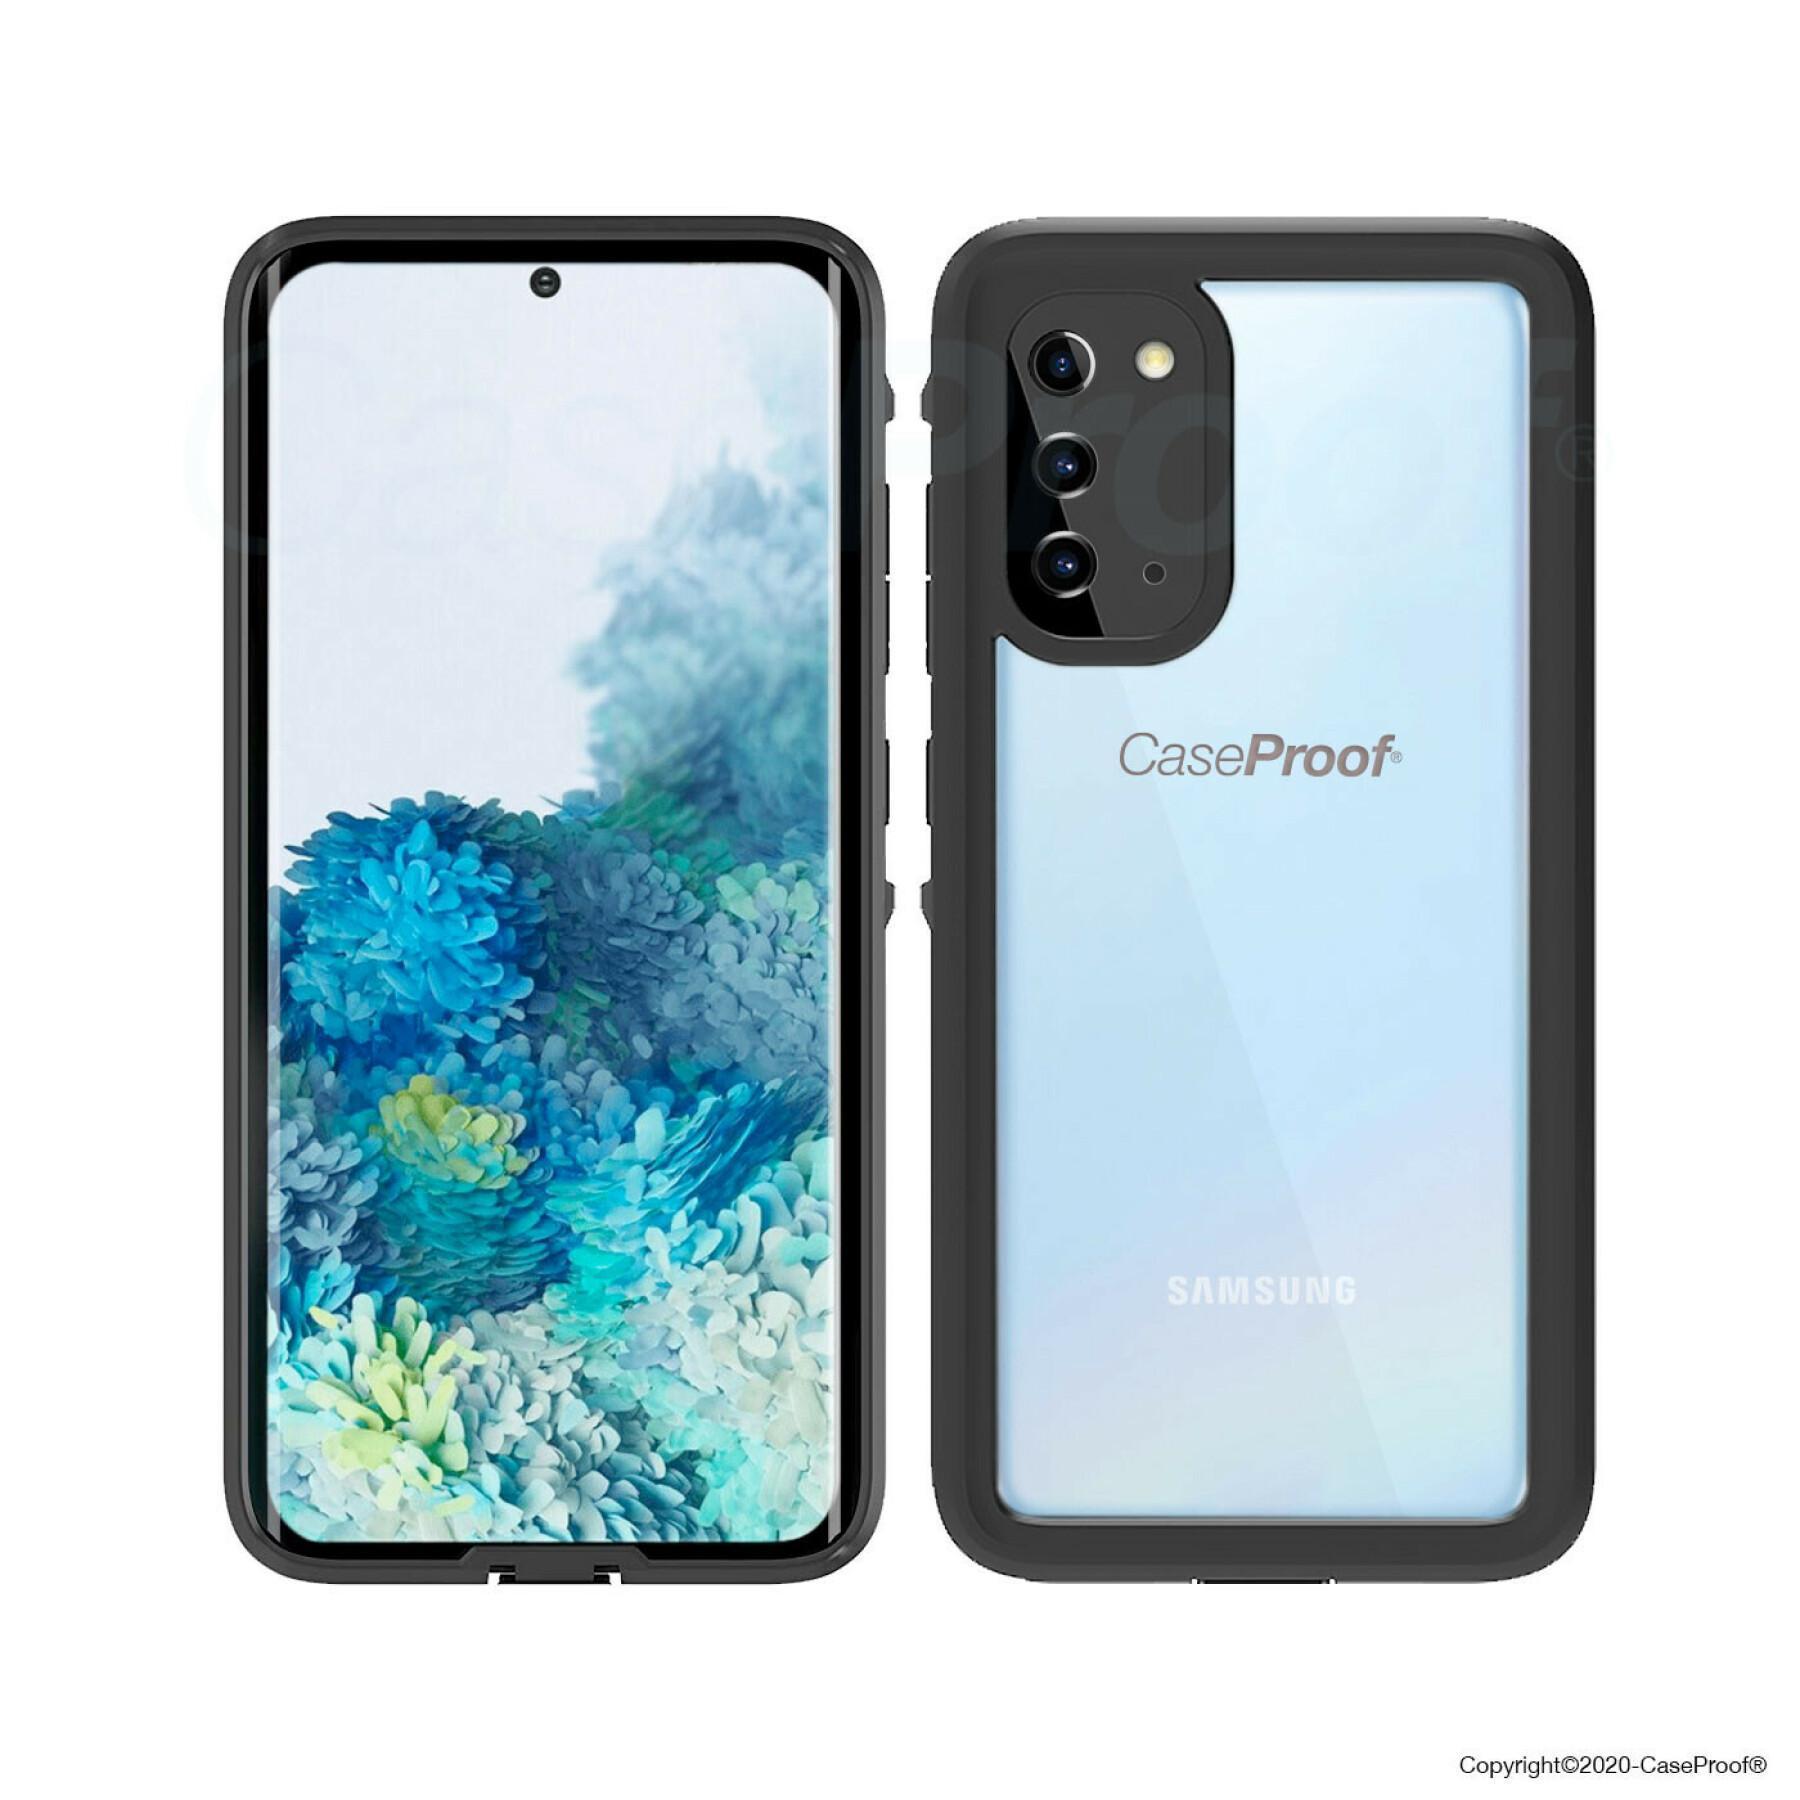 Waterproof and shockproof smartphone case samsung galaxy s 20 CaseProof